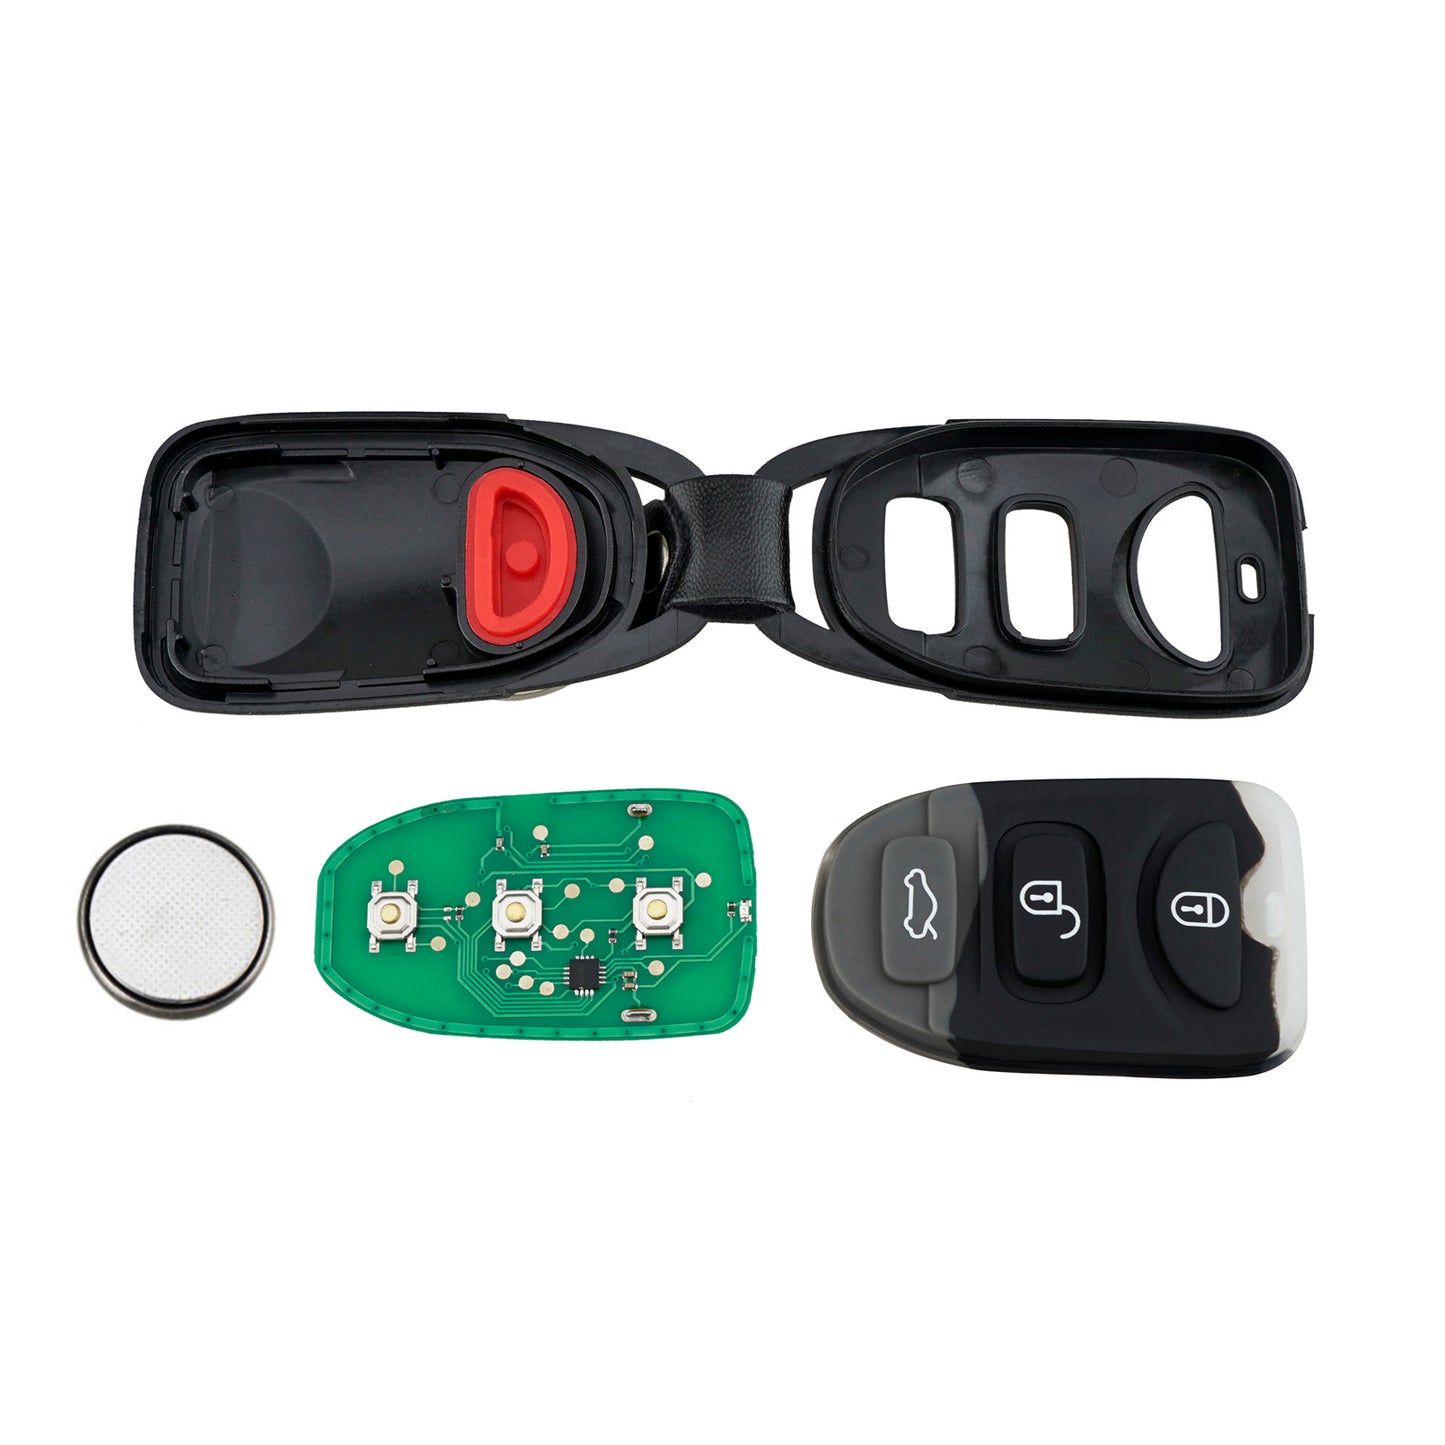 4 Buttons 315MHz Keyless Entry Fob Remote Car Key For 2011 - 2015 Hyundai Sonata FCC ID: OSLOKA-950T SKU : J931